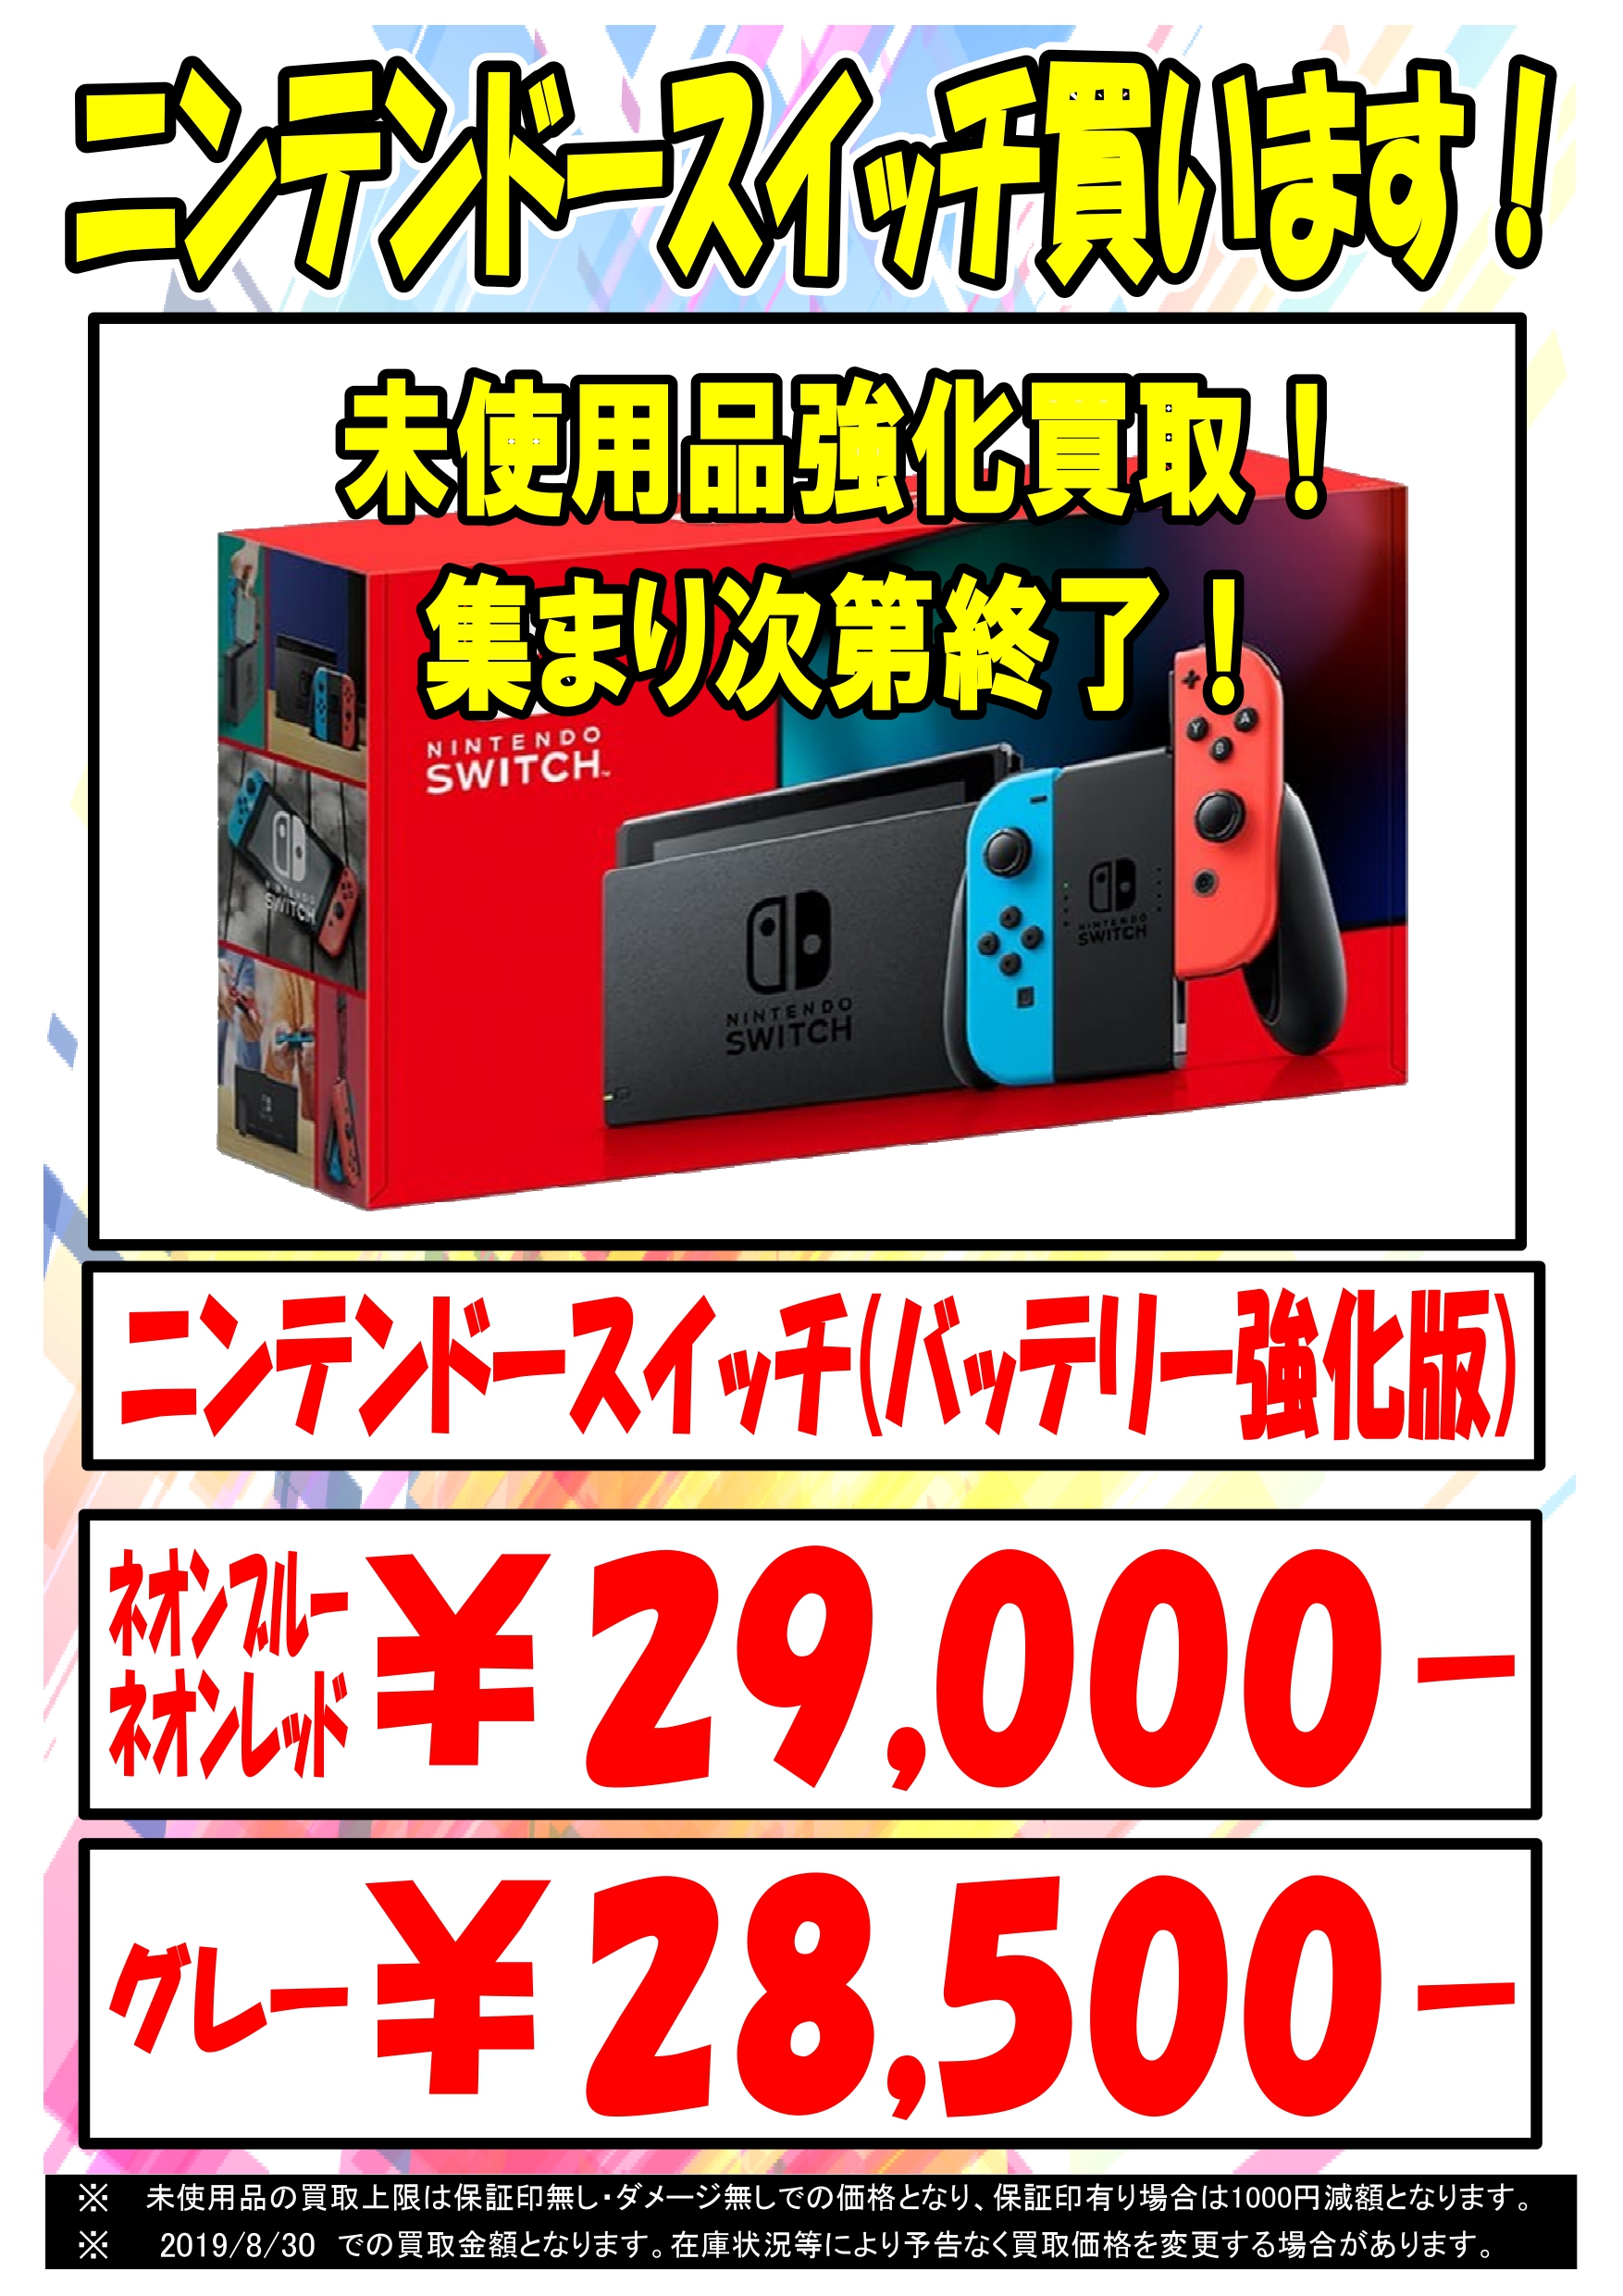 Nintendo Switch ネオン 新型 バッテリー強化版